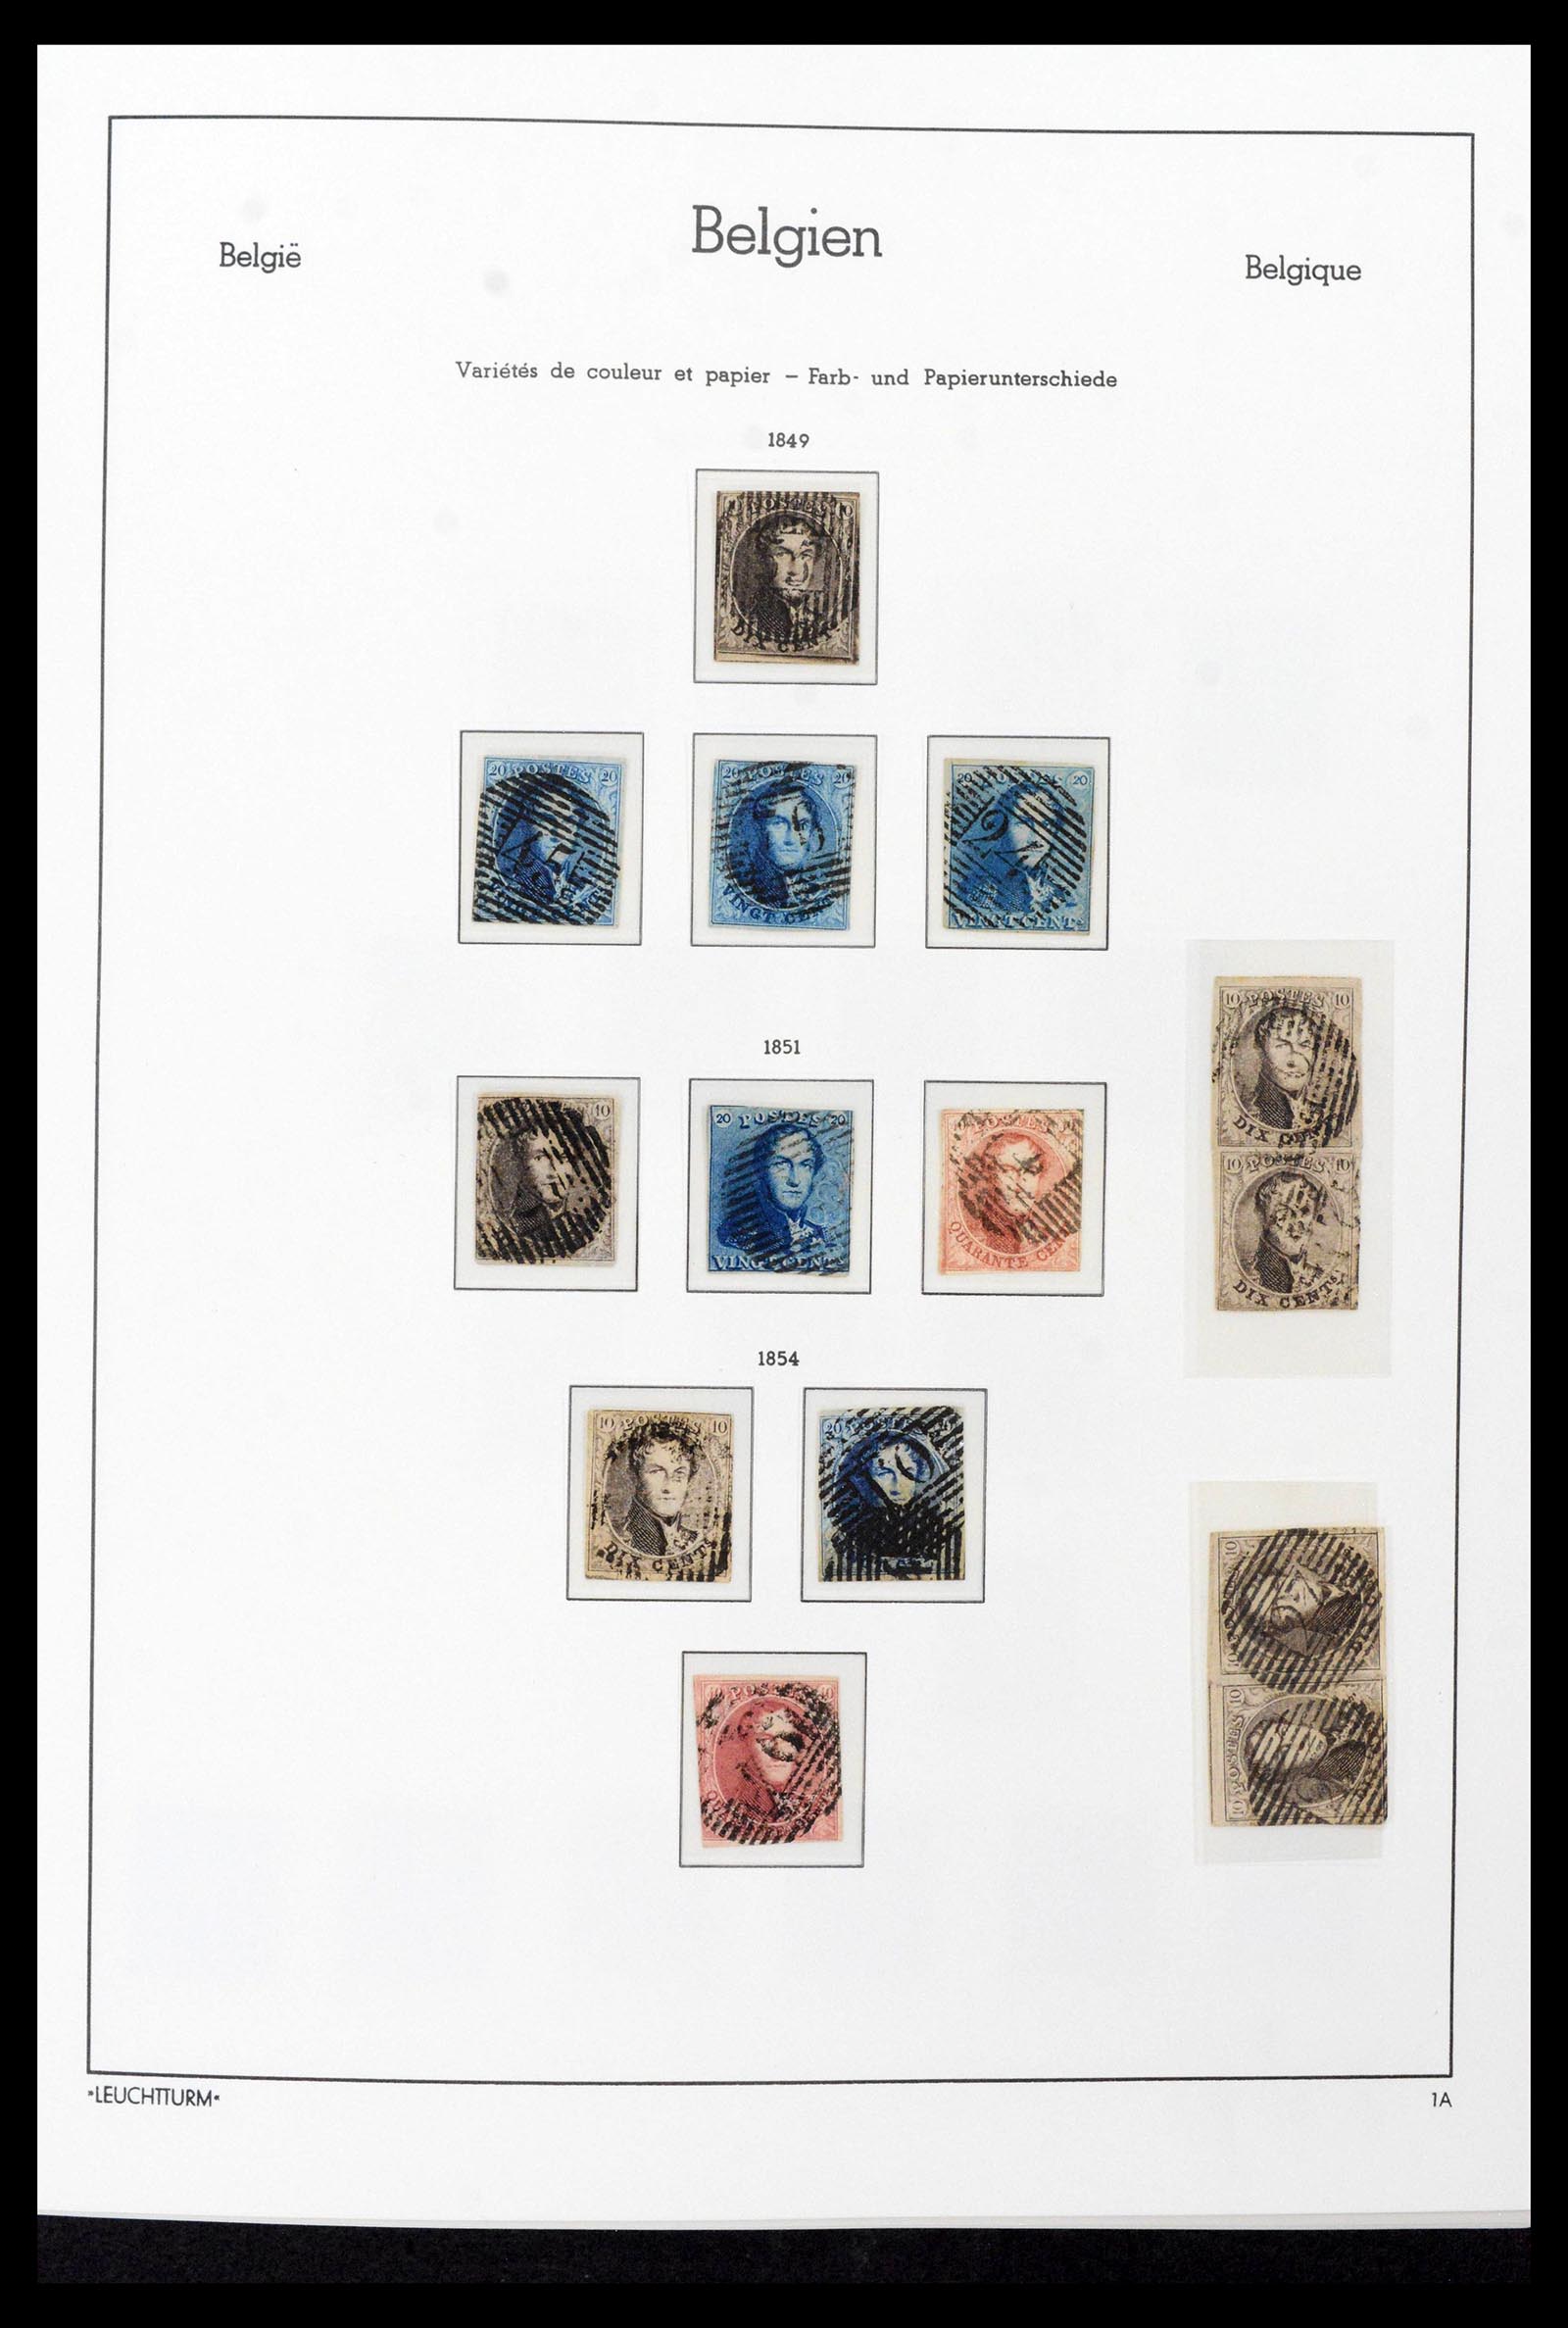 39137 0002 - Stamp collection 39137 Belgium 1849-2002.